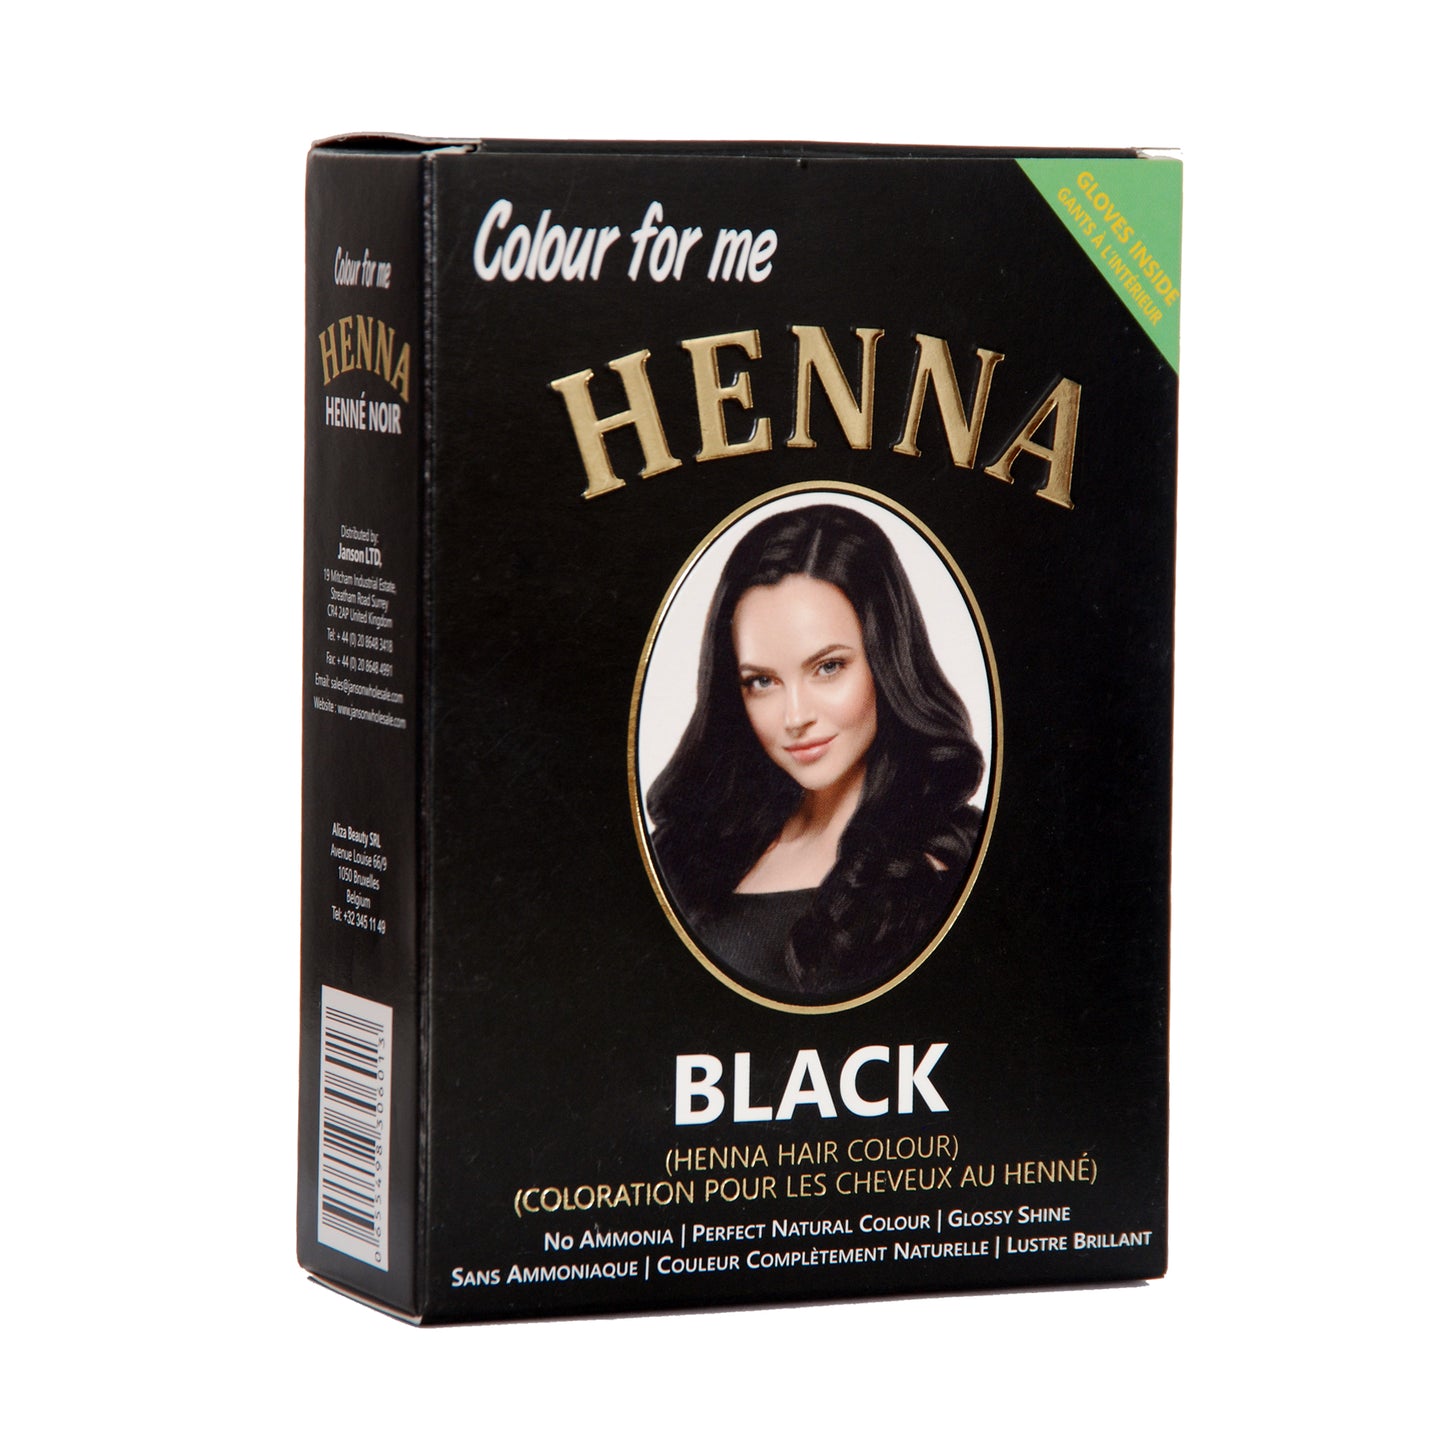 Colour for me - HENNA Black - Permanent